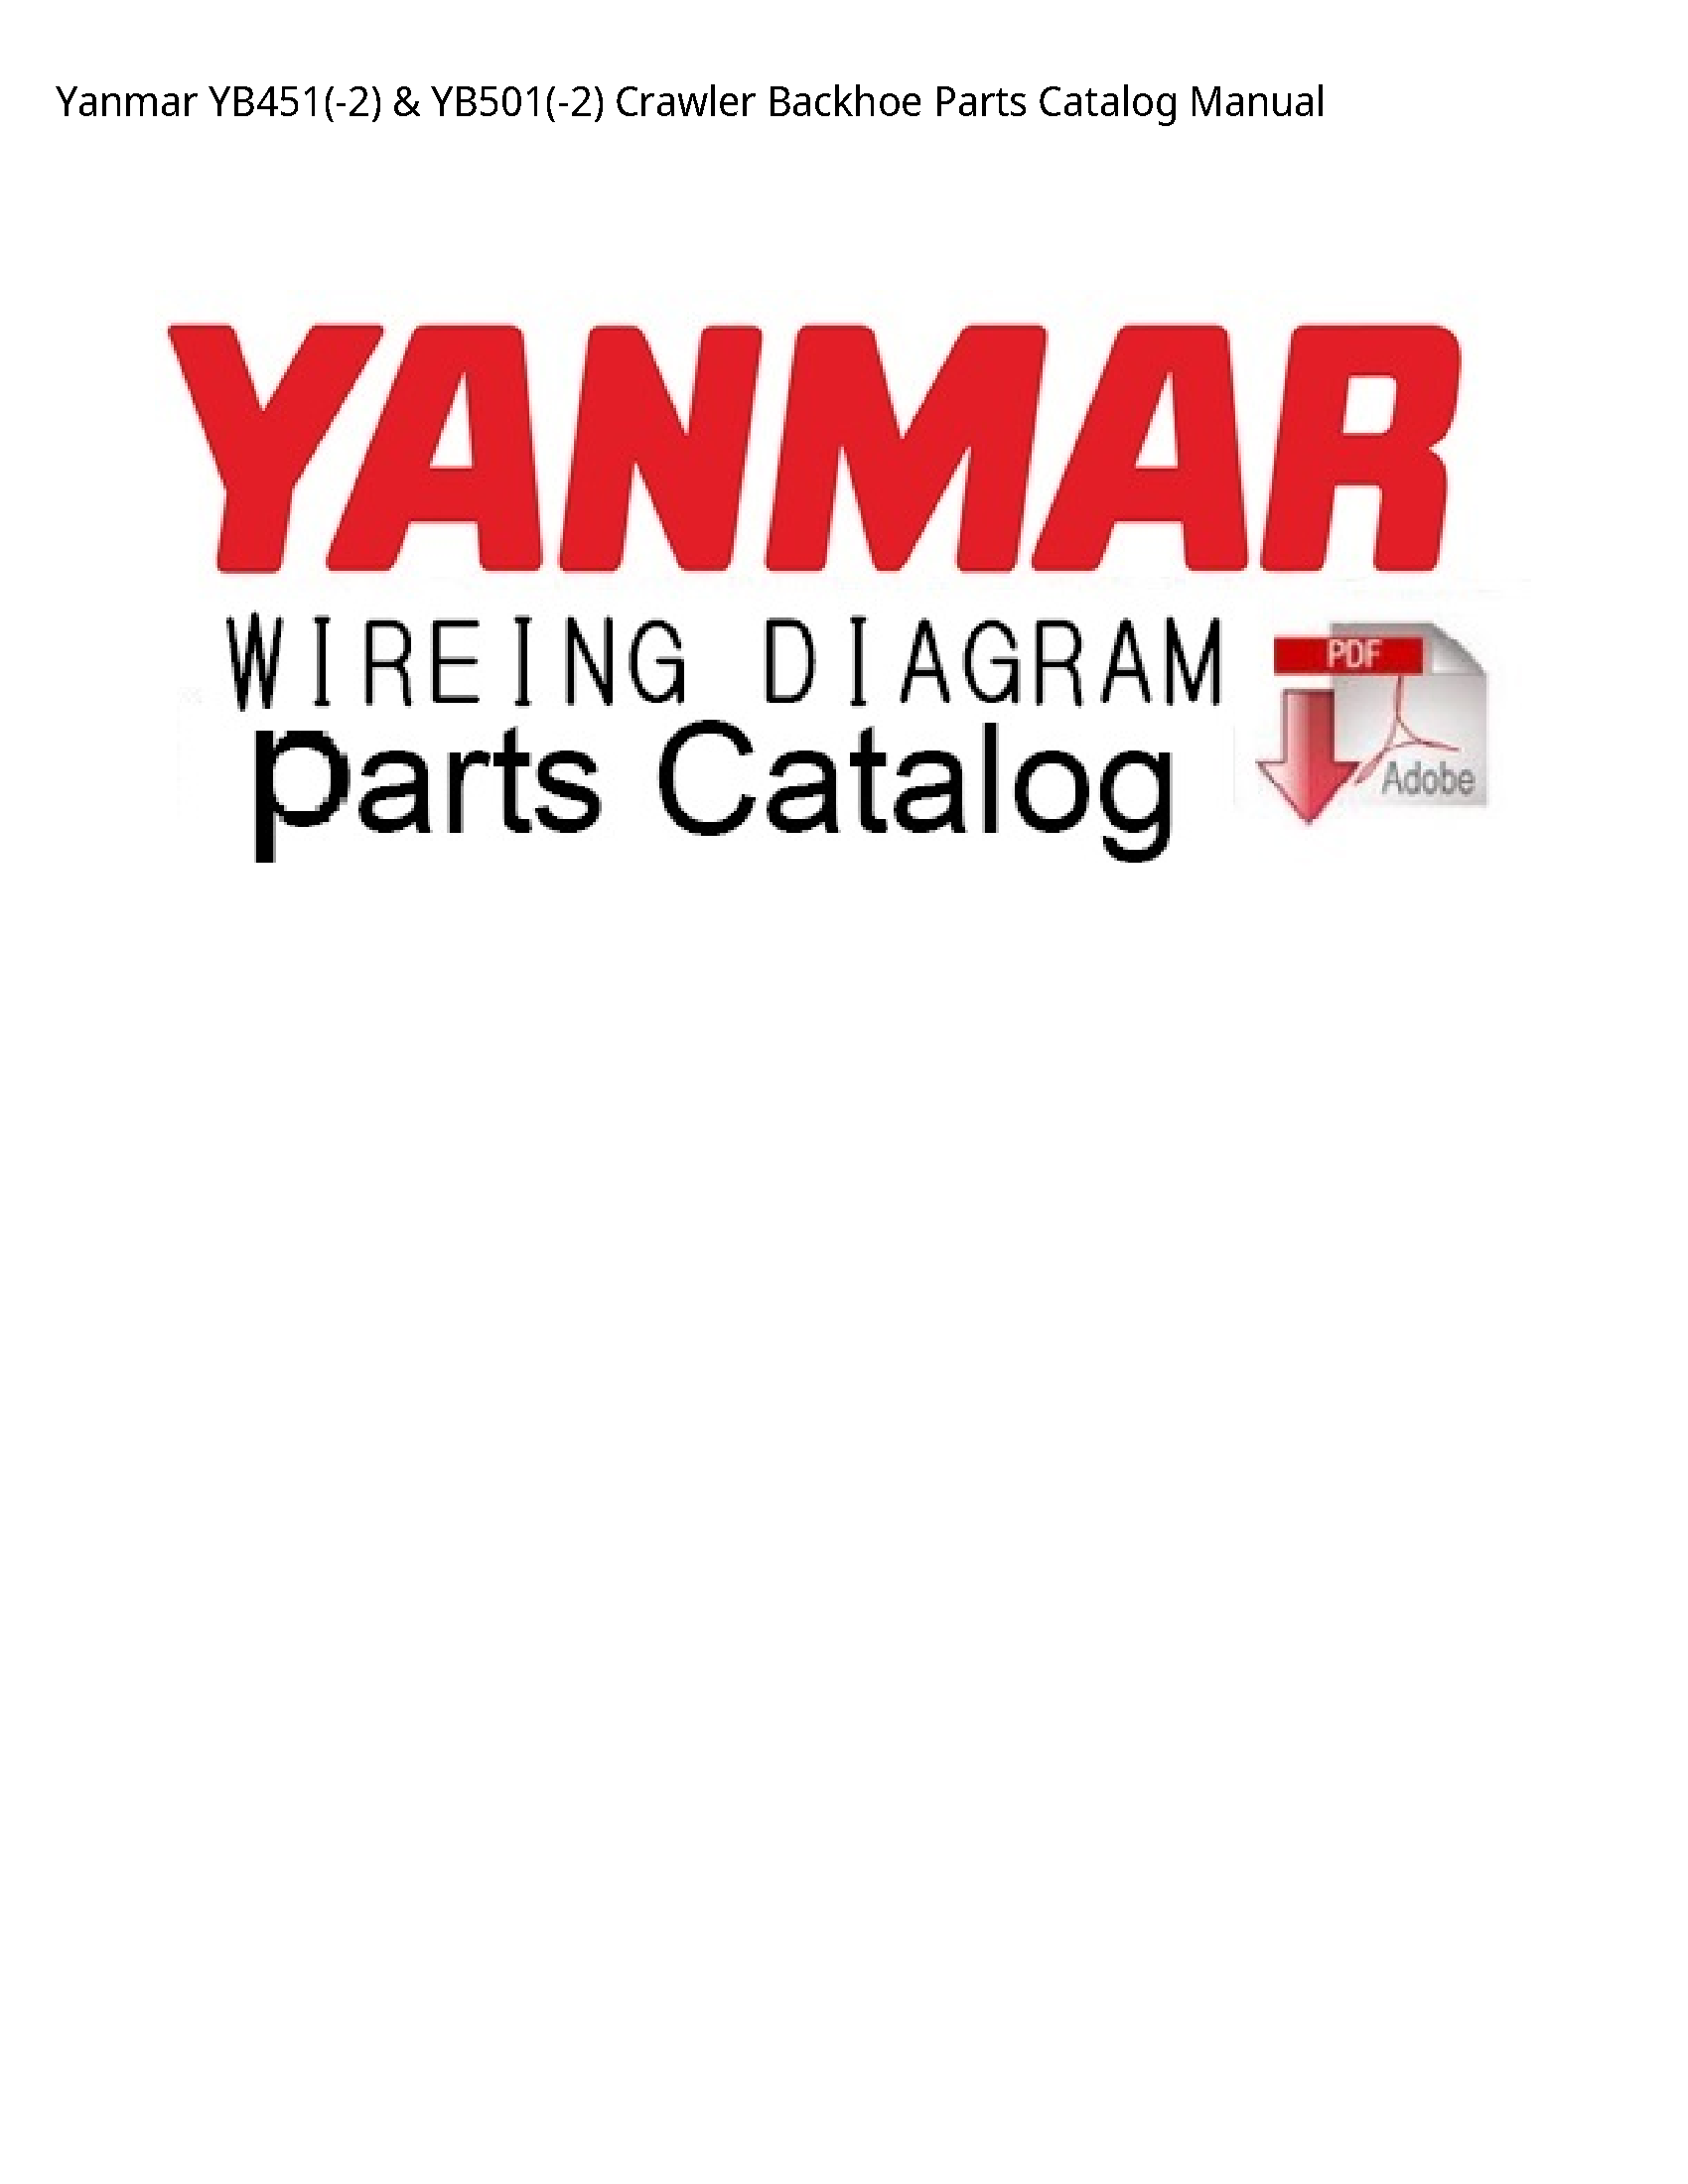 Yanmar YB451(-2) Crawler Backhoe Parts Catalog manual